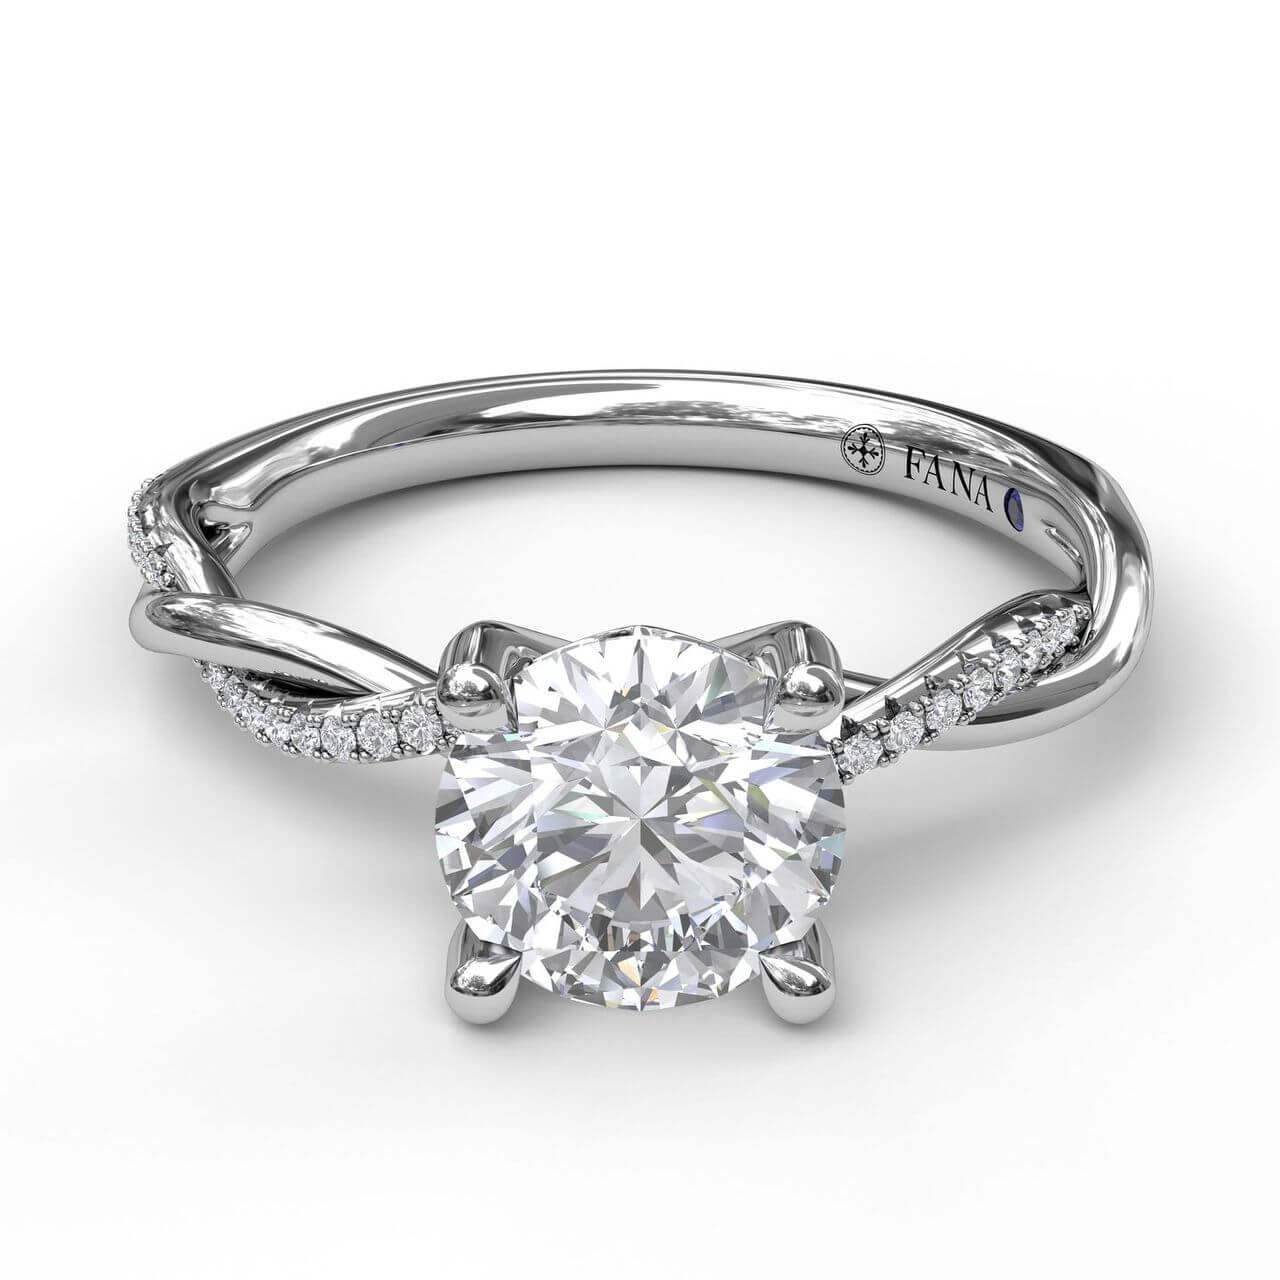 FANA 14 Karat White Gold Twist Round Diamond Engagement Ring S3901/WG